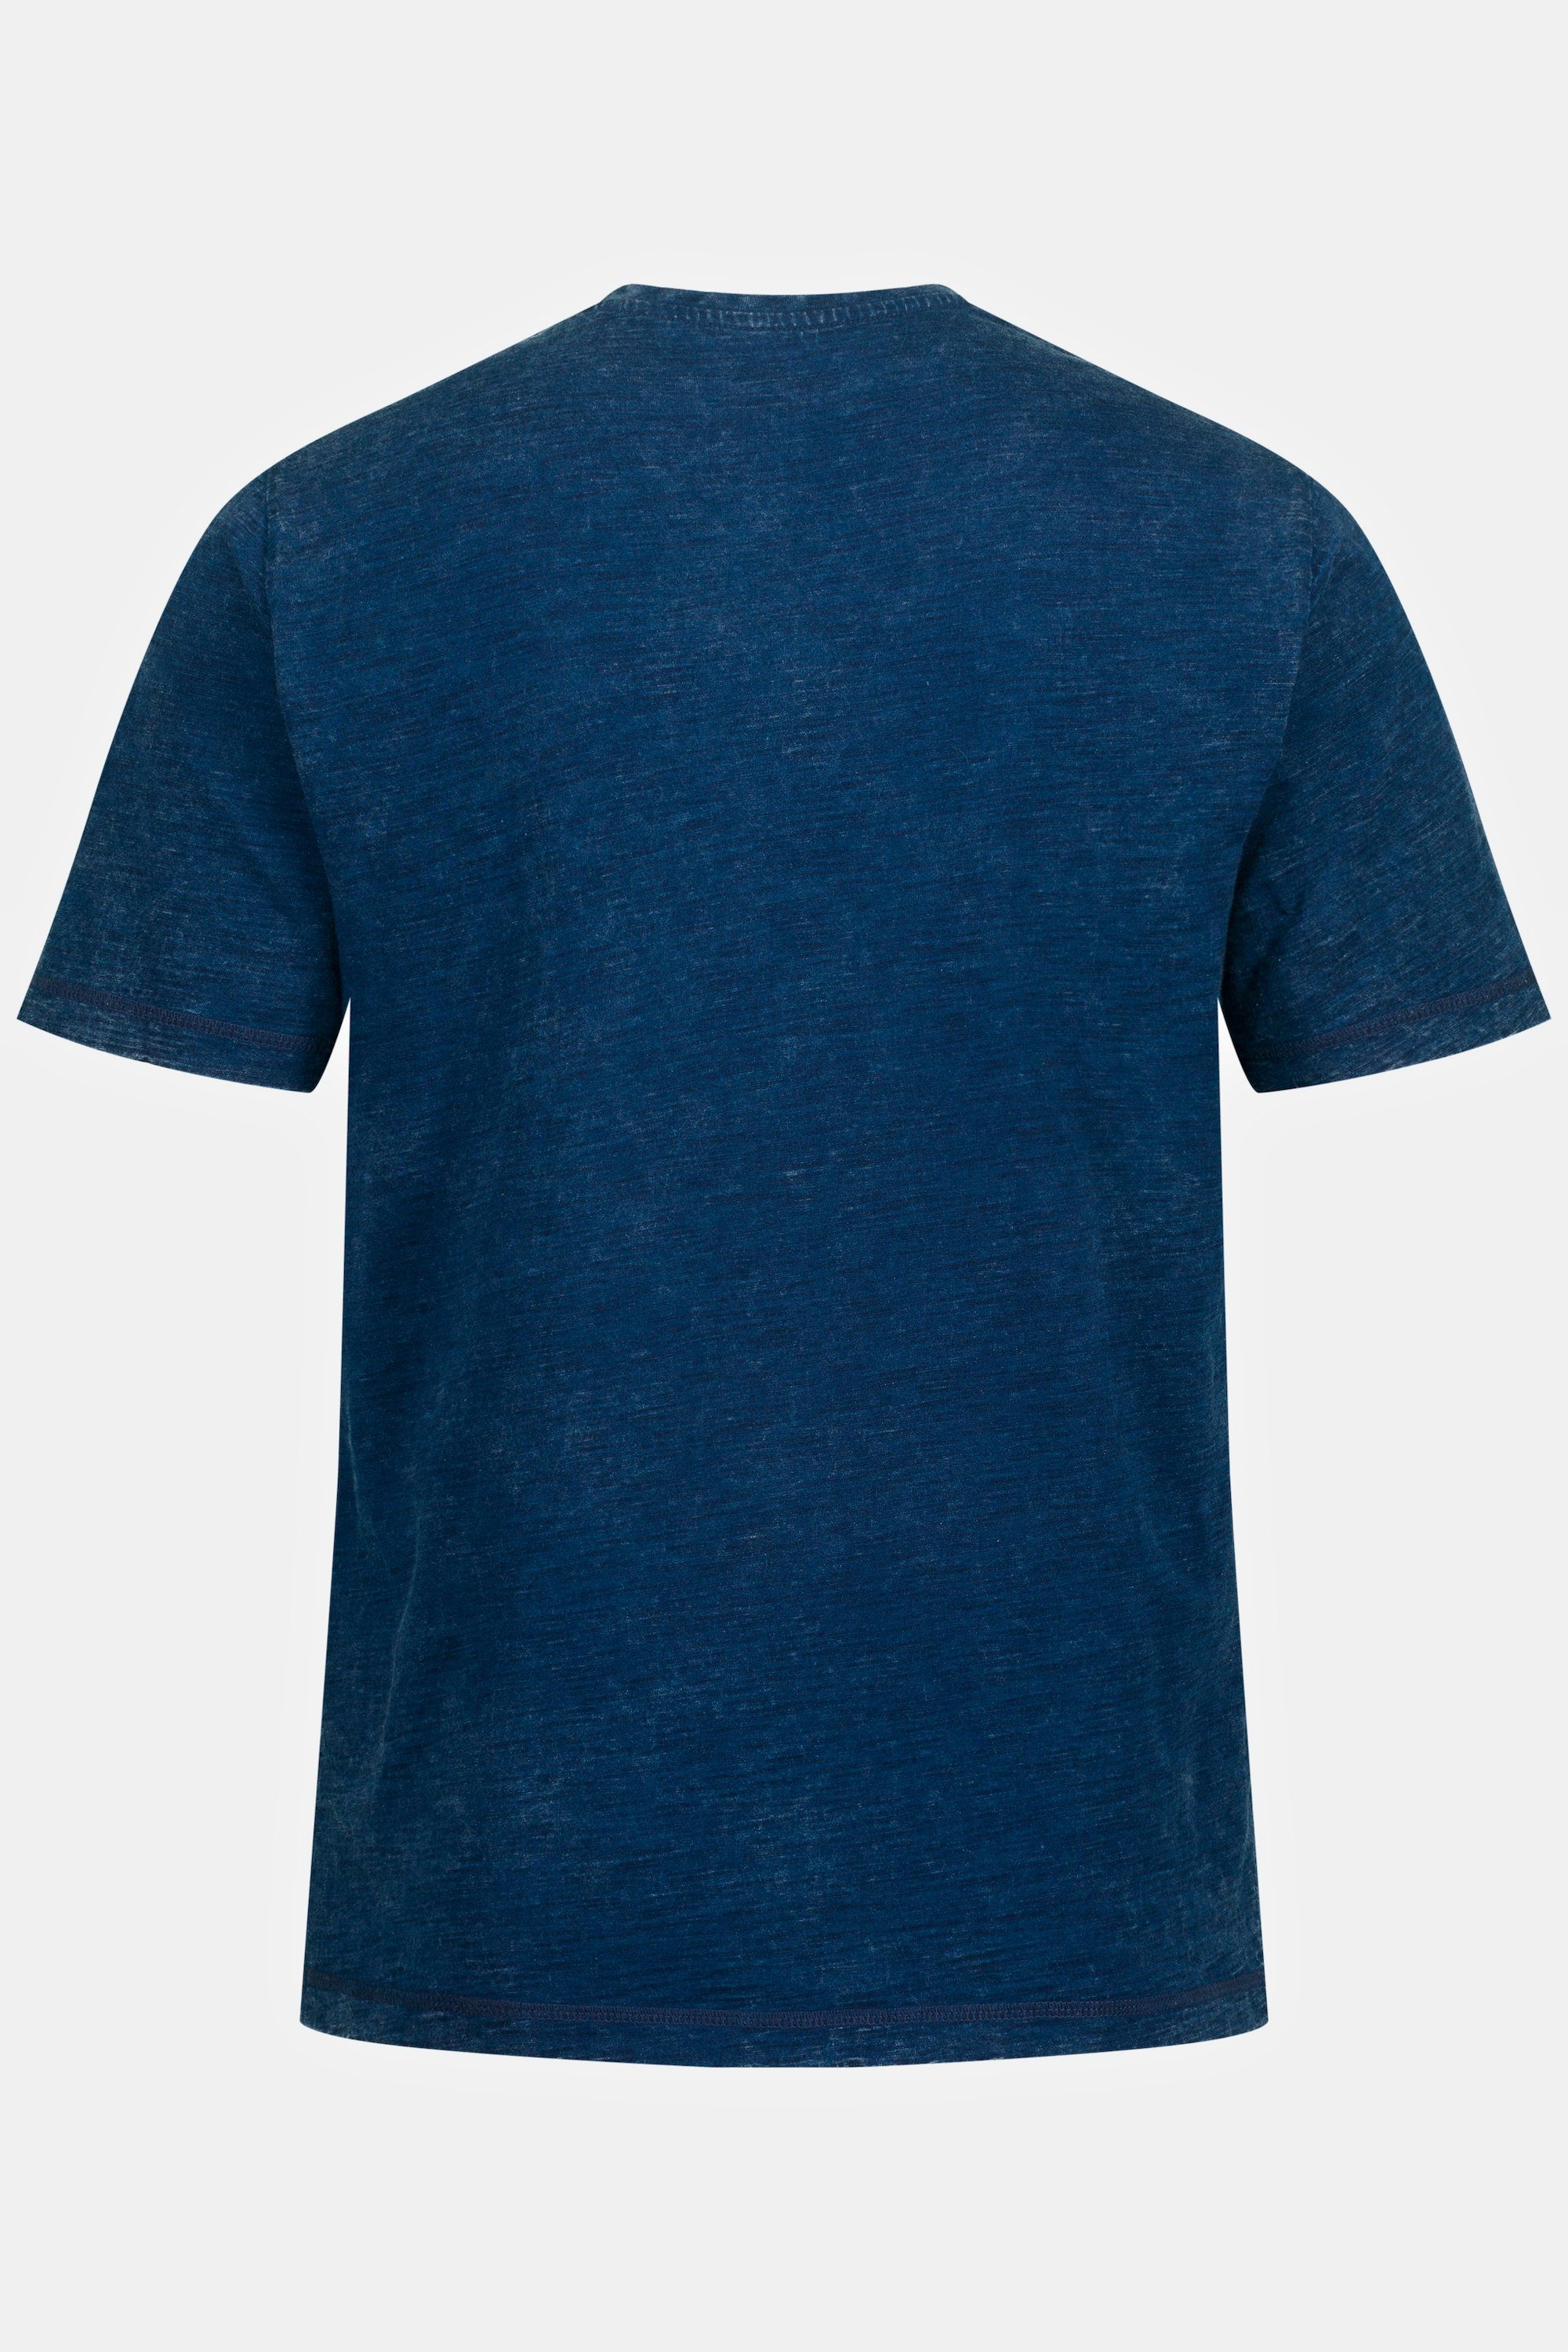 Print Indigo-Färbung T-Shirt T-Shirt Halbarm Rundhals JP1880